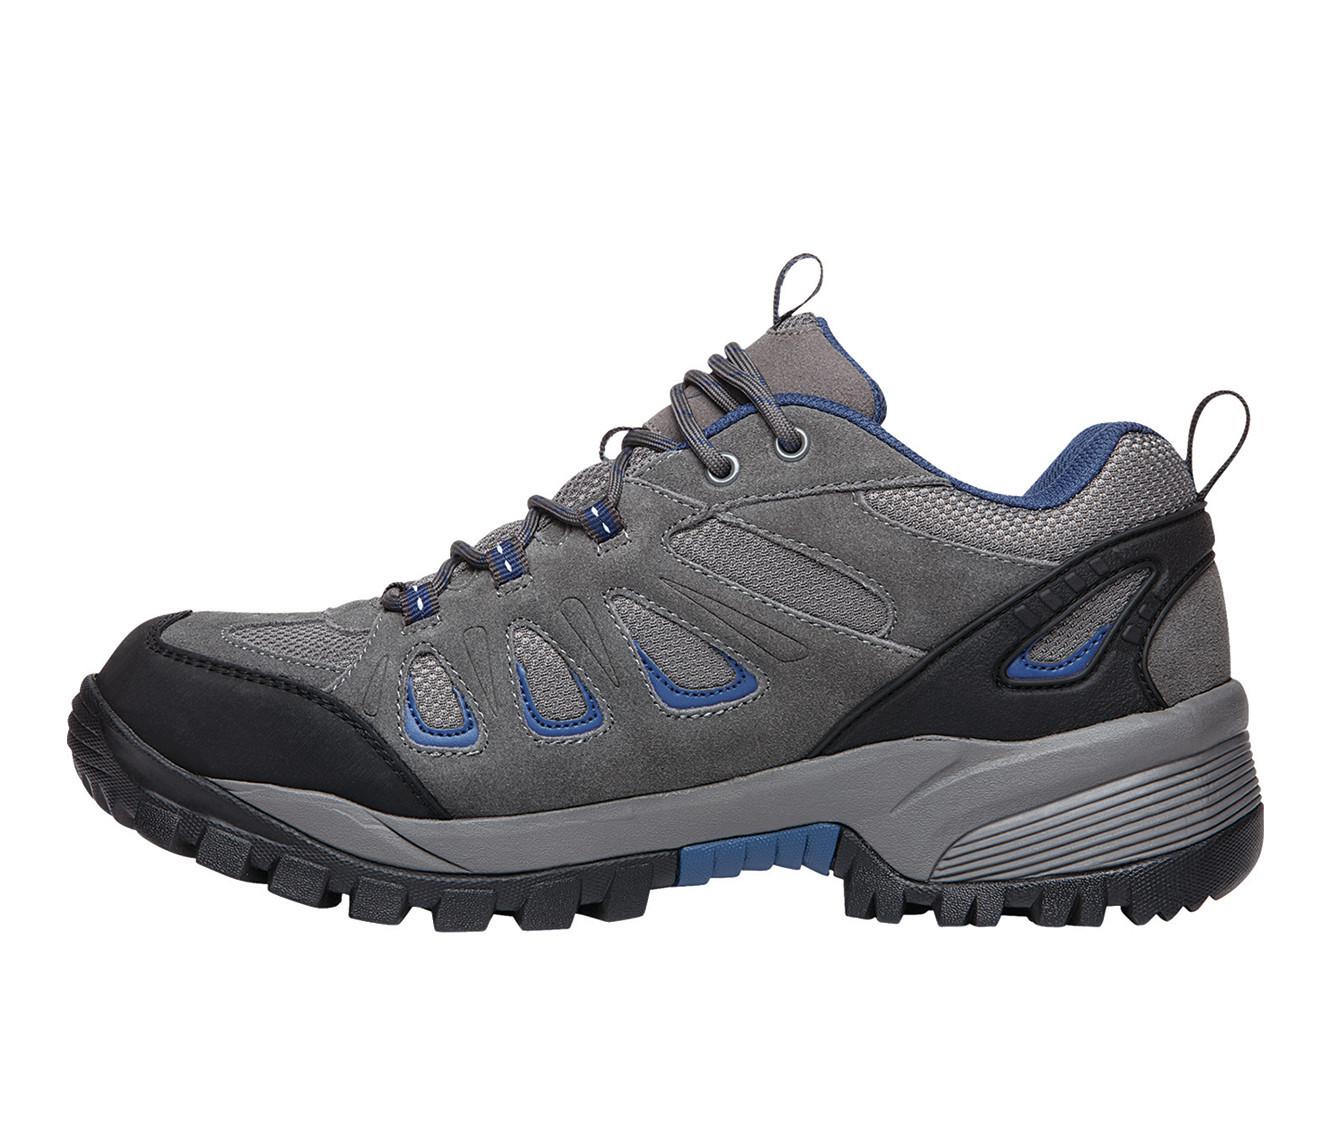 Men's Propet Ridge Walker Low Hiking Boots